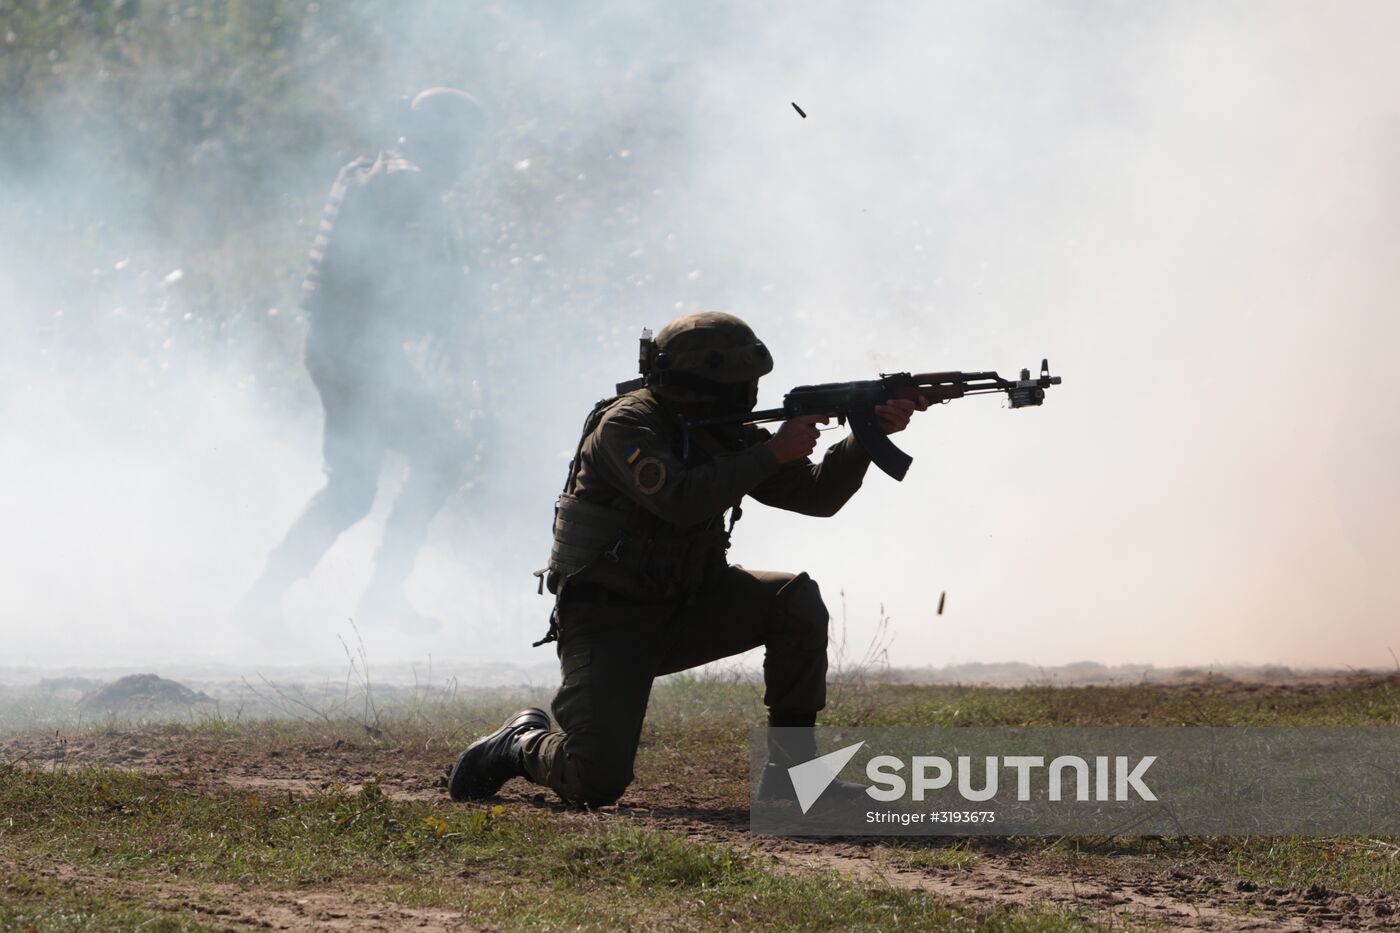 Rapid Trident-2017 military exercise in Lviv Region